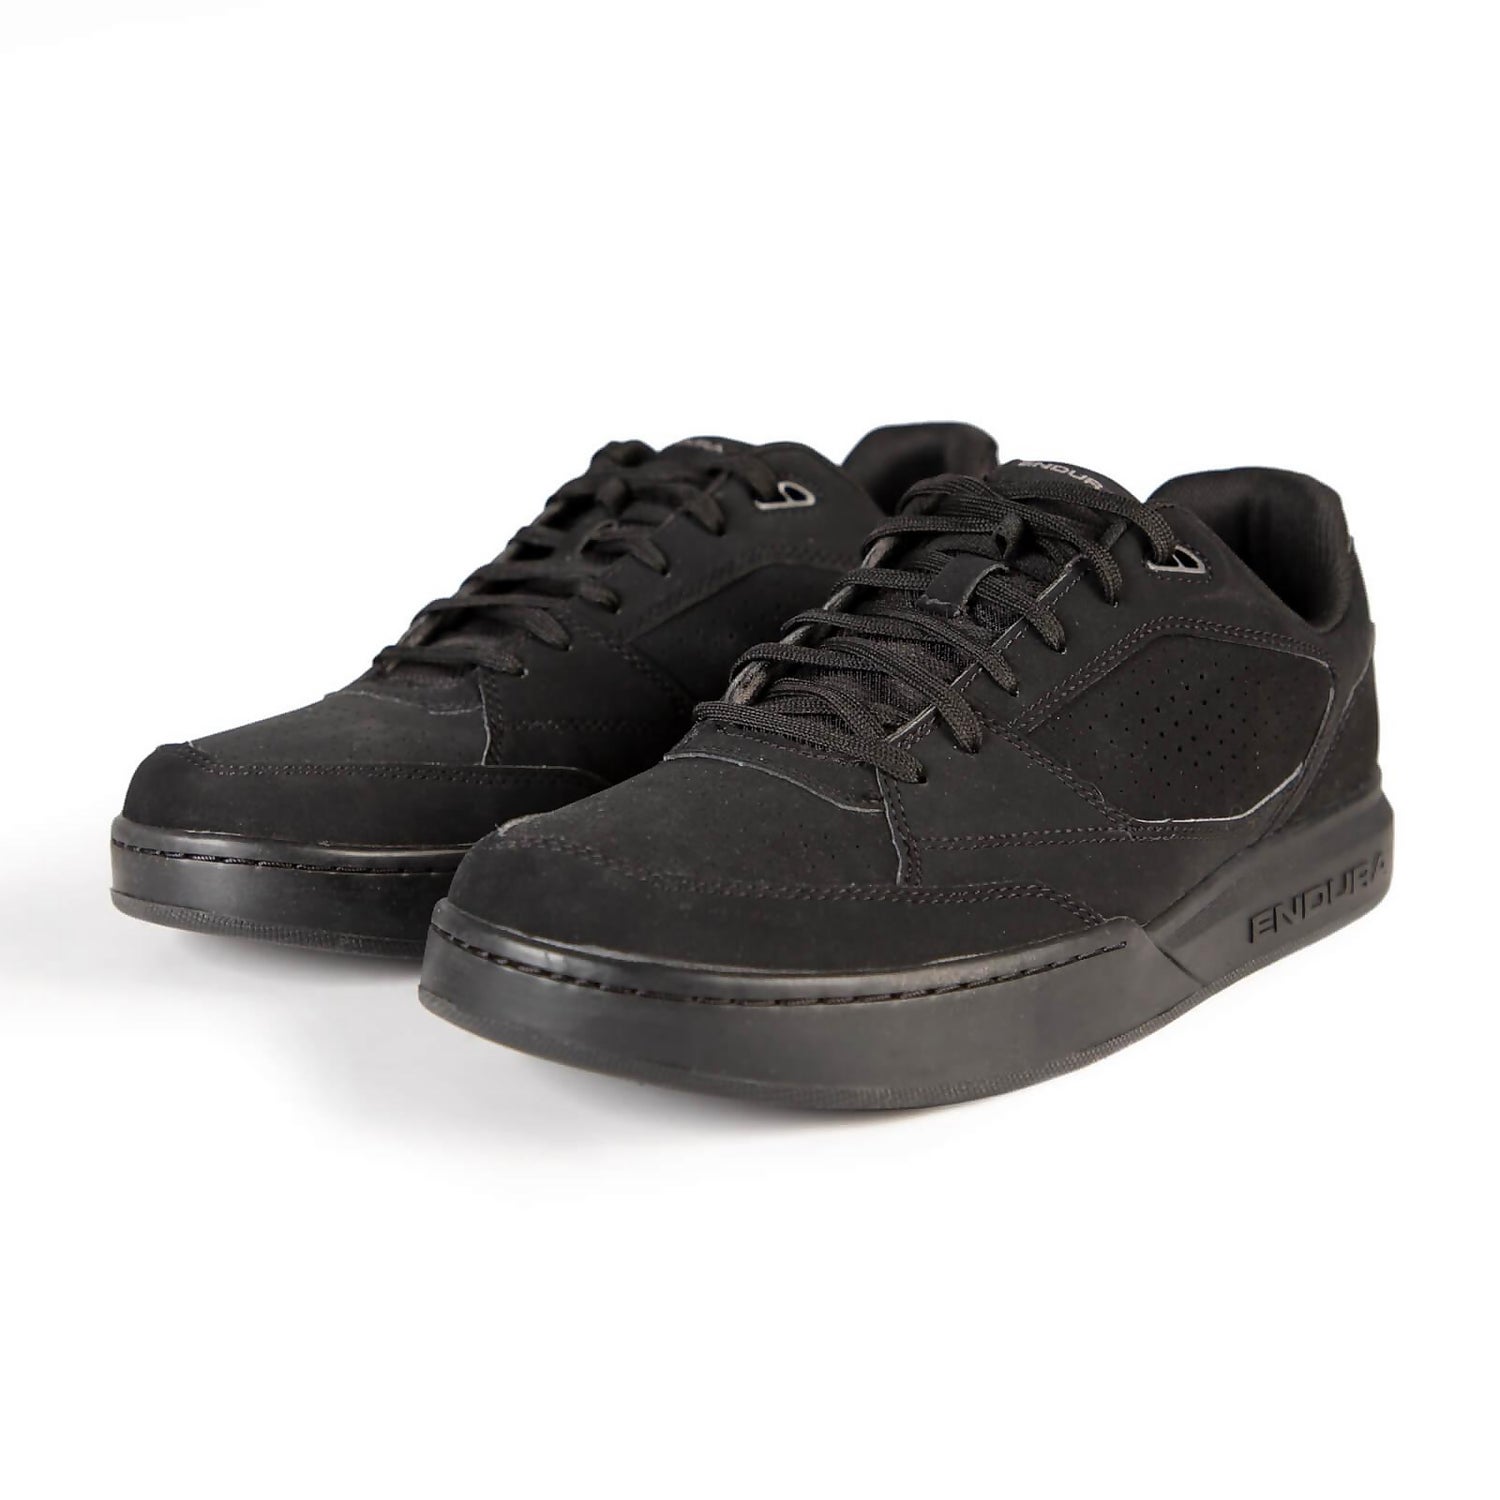 Hummvee Flat Pedal Shoe - Black | Endura